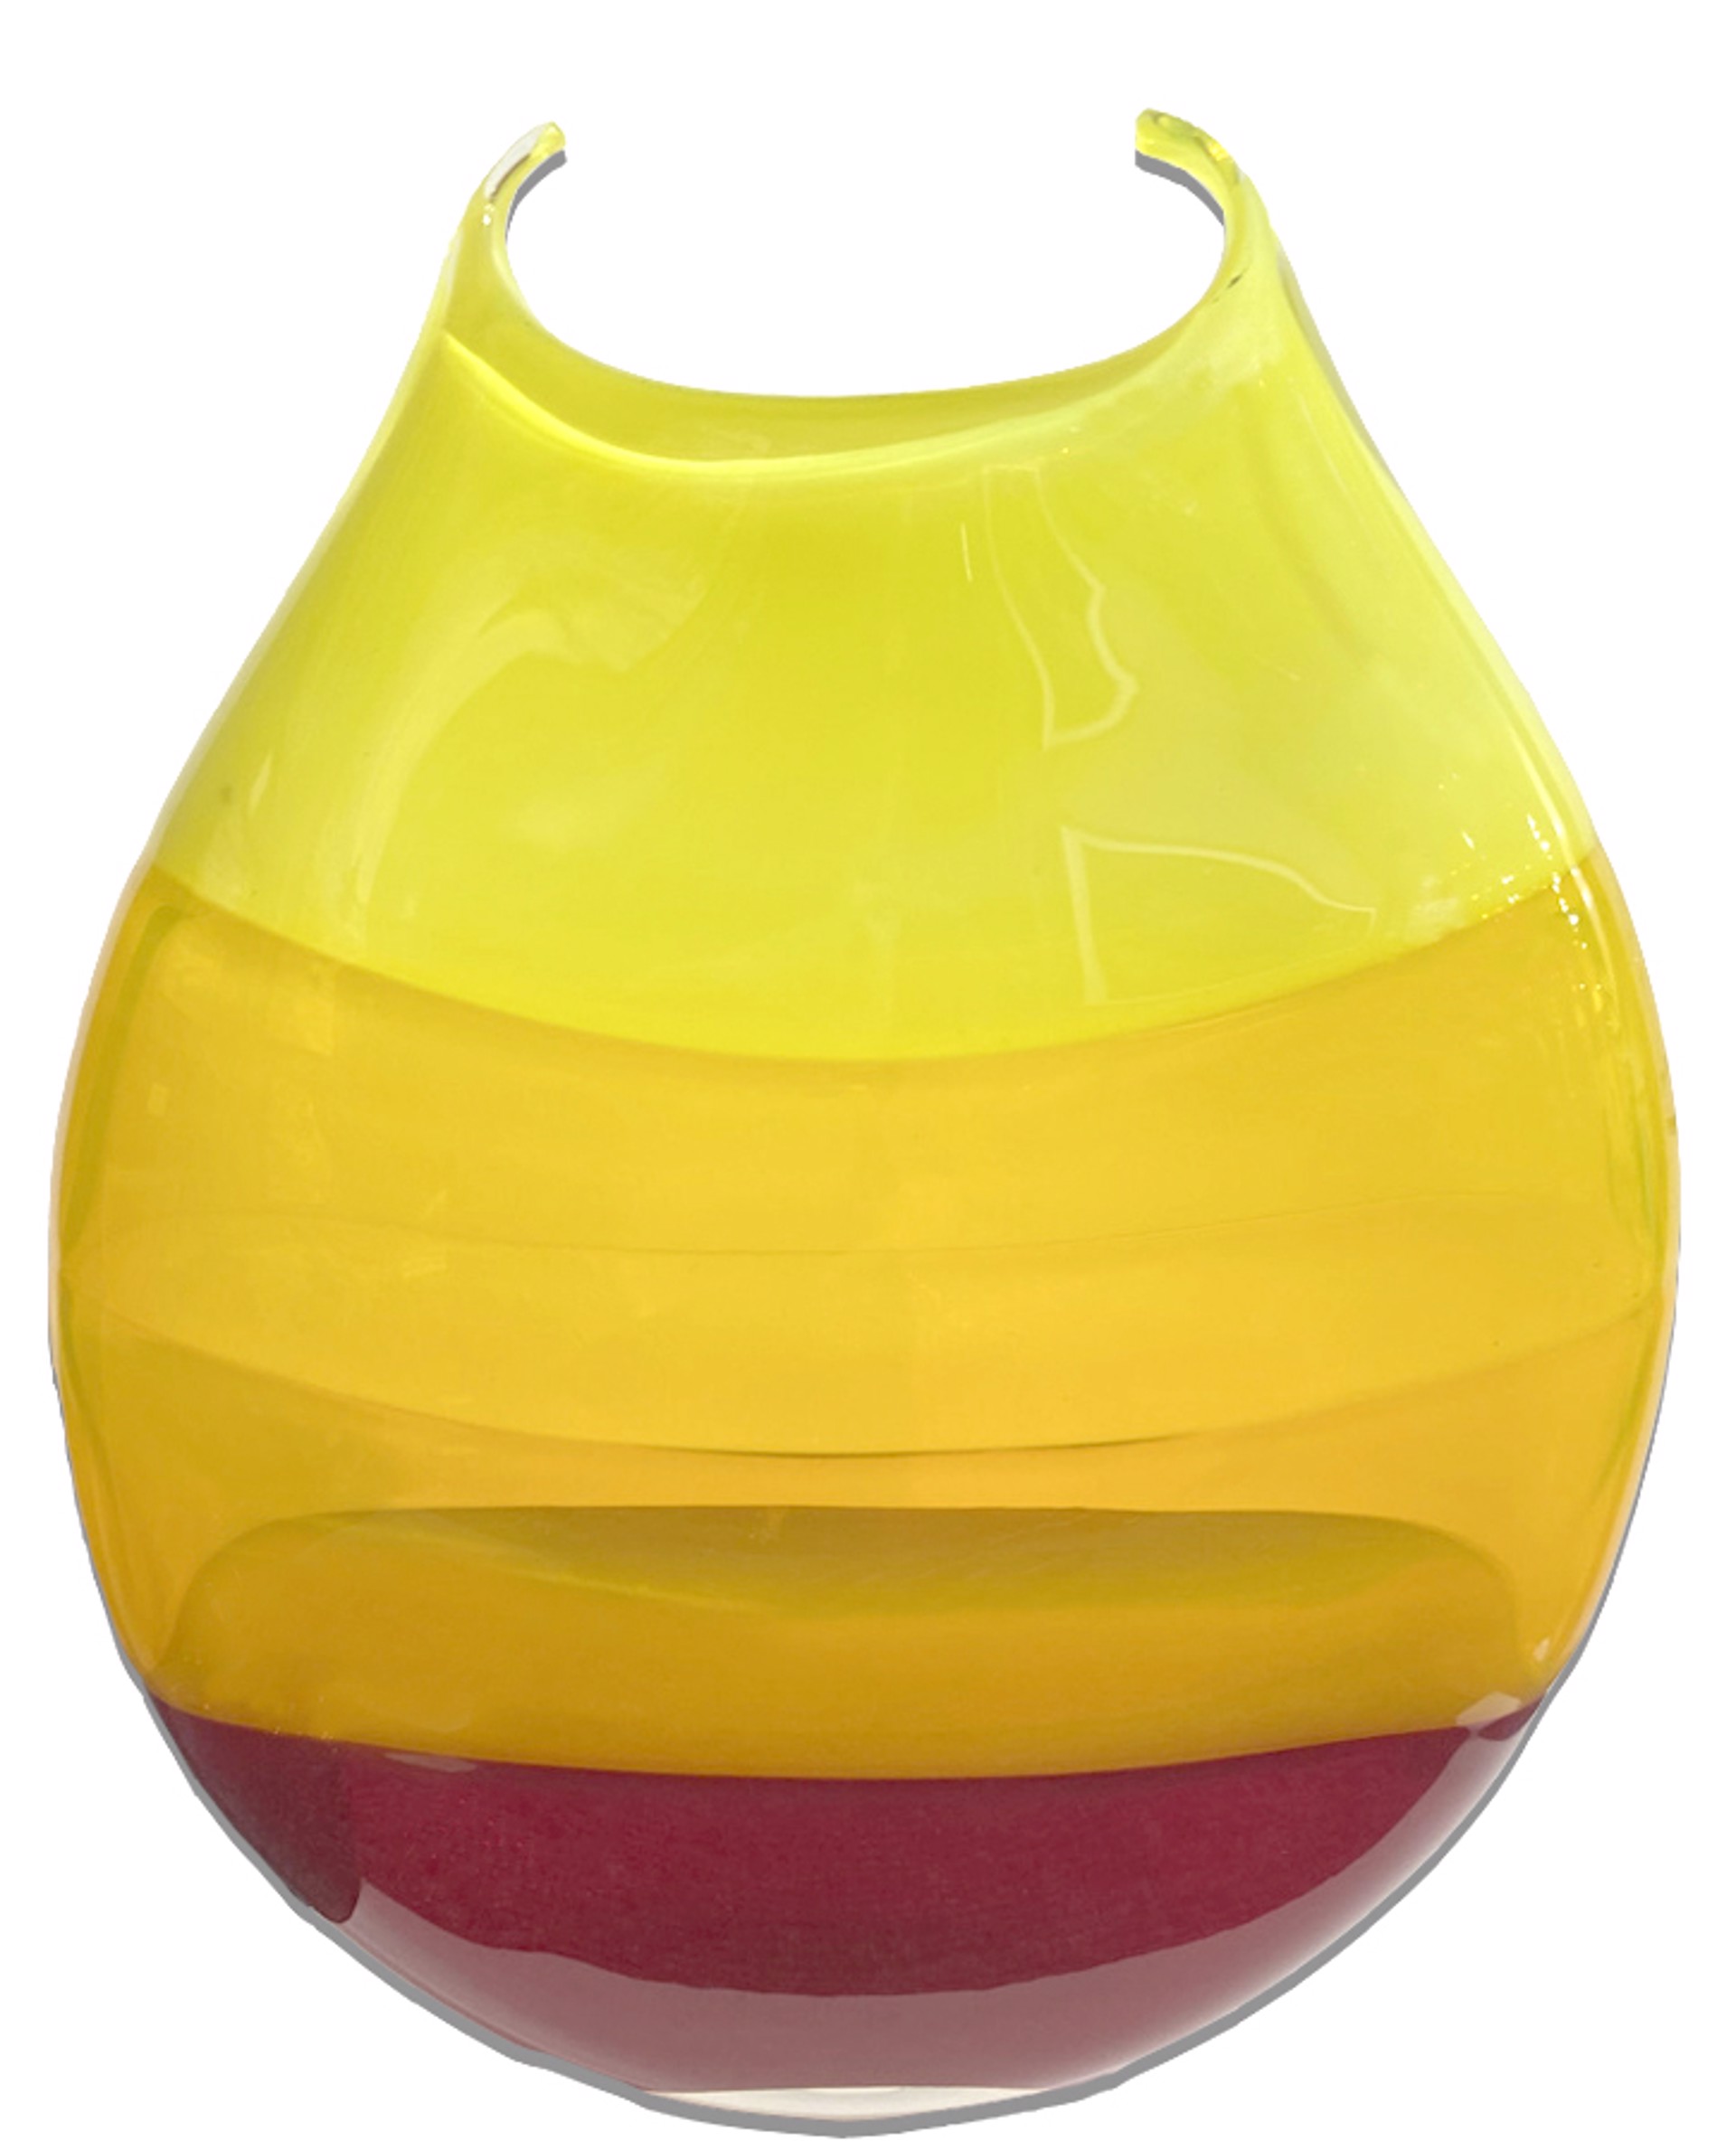 Glass Vase by Daniel Wooddell